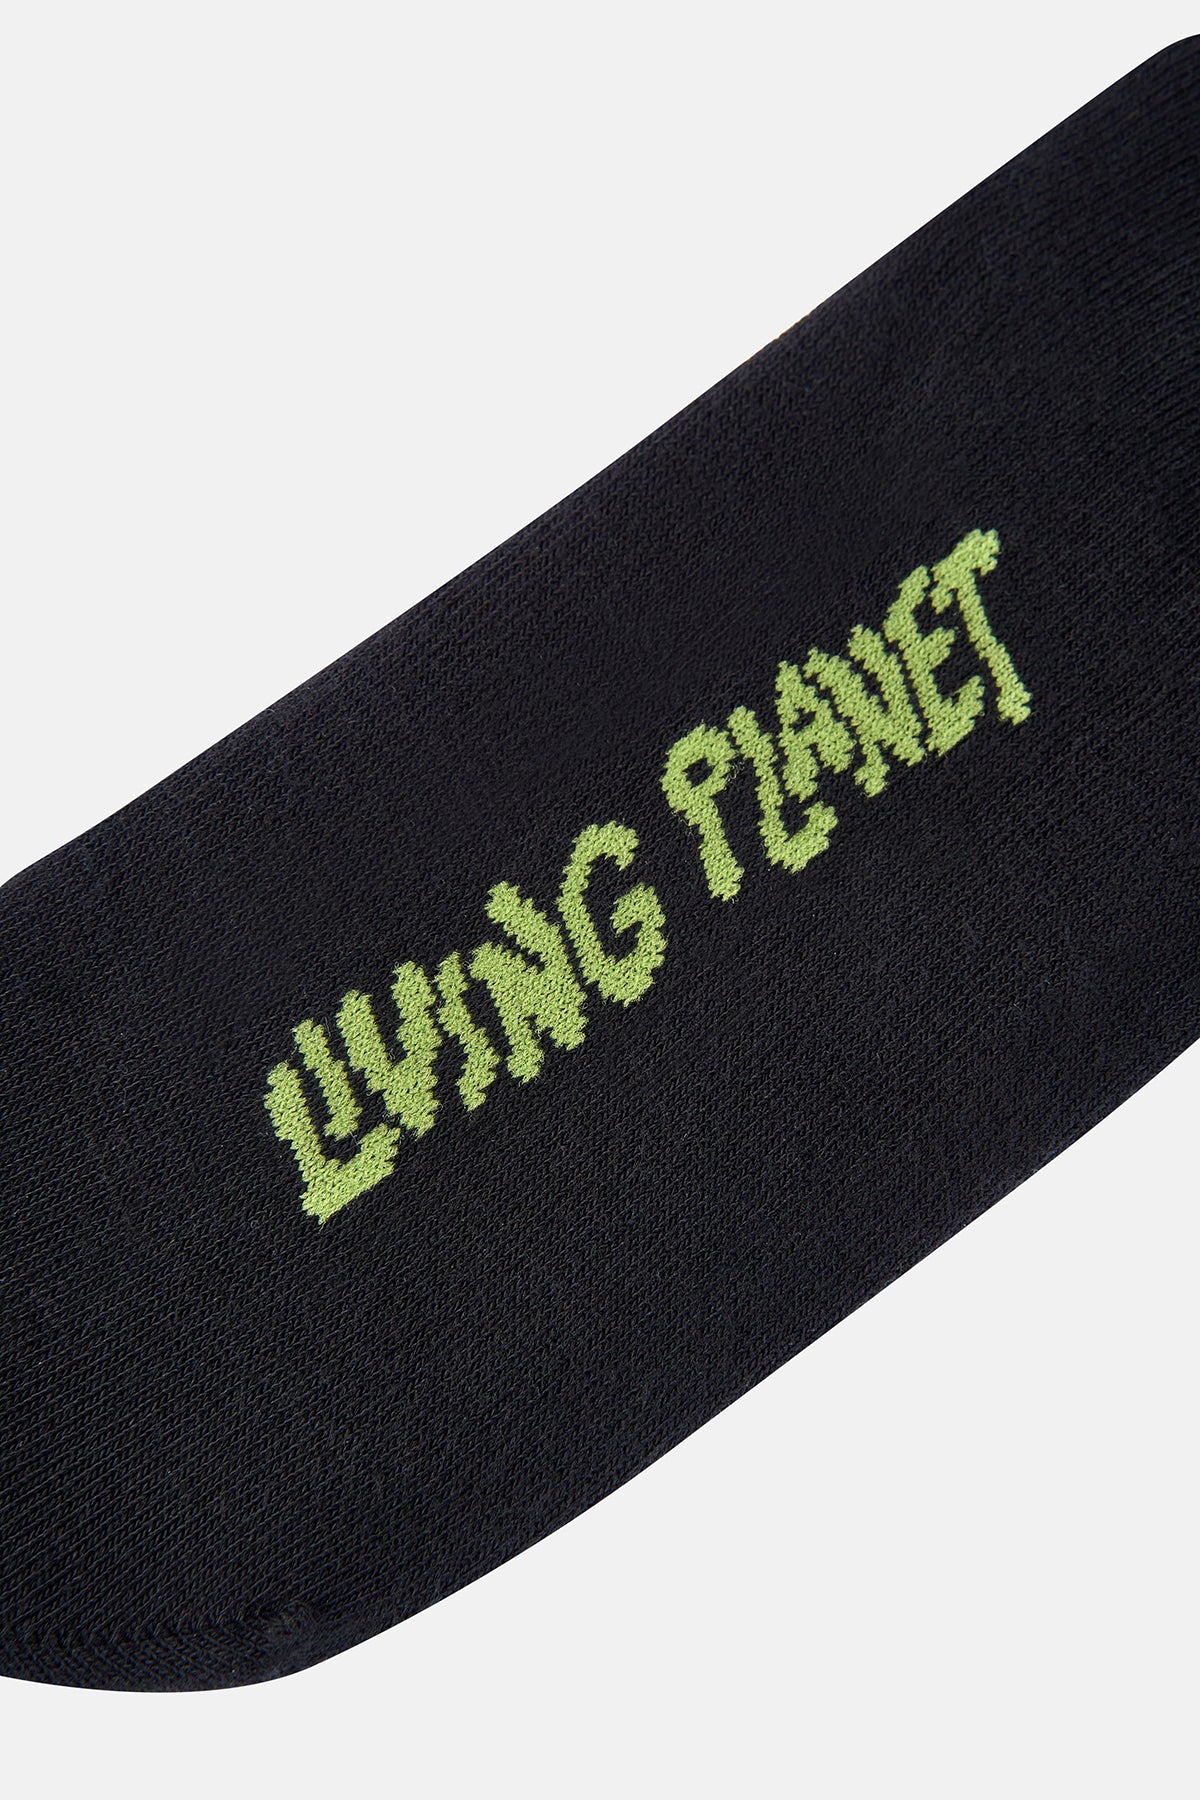 Living Planet Spor Çorap - Siyah